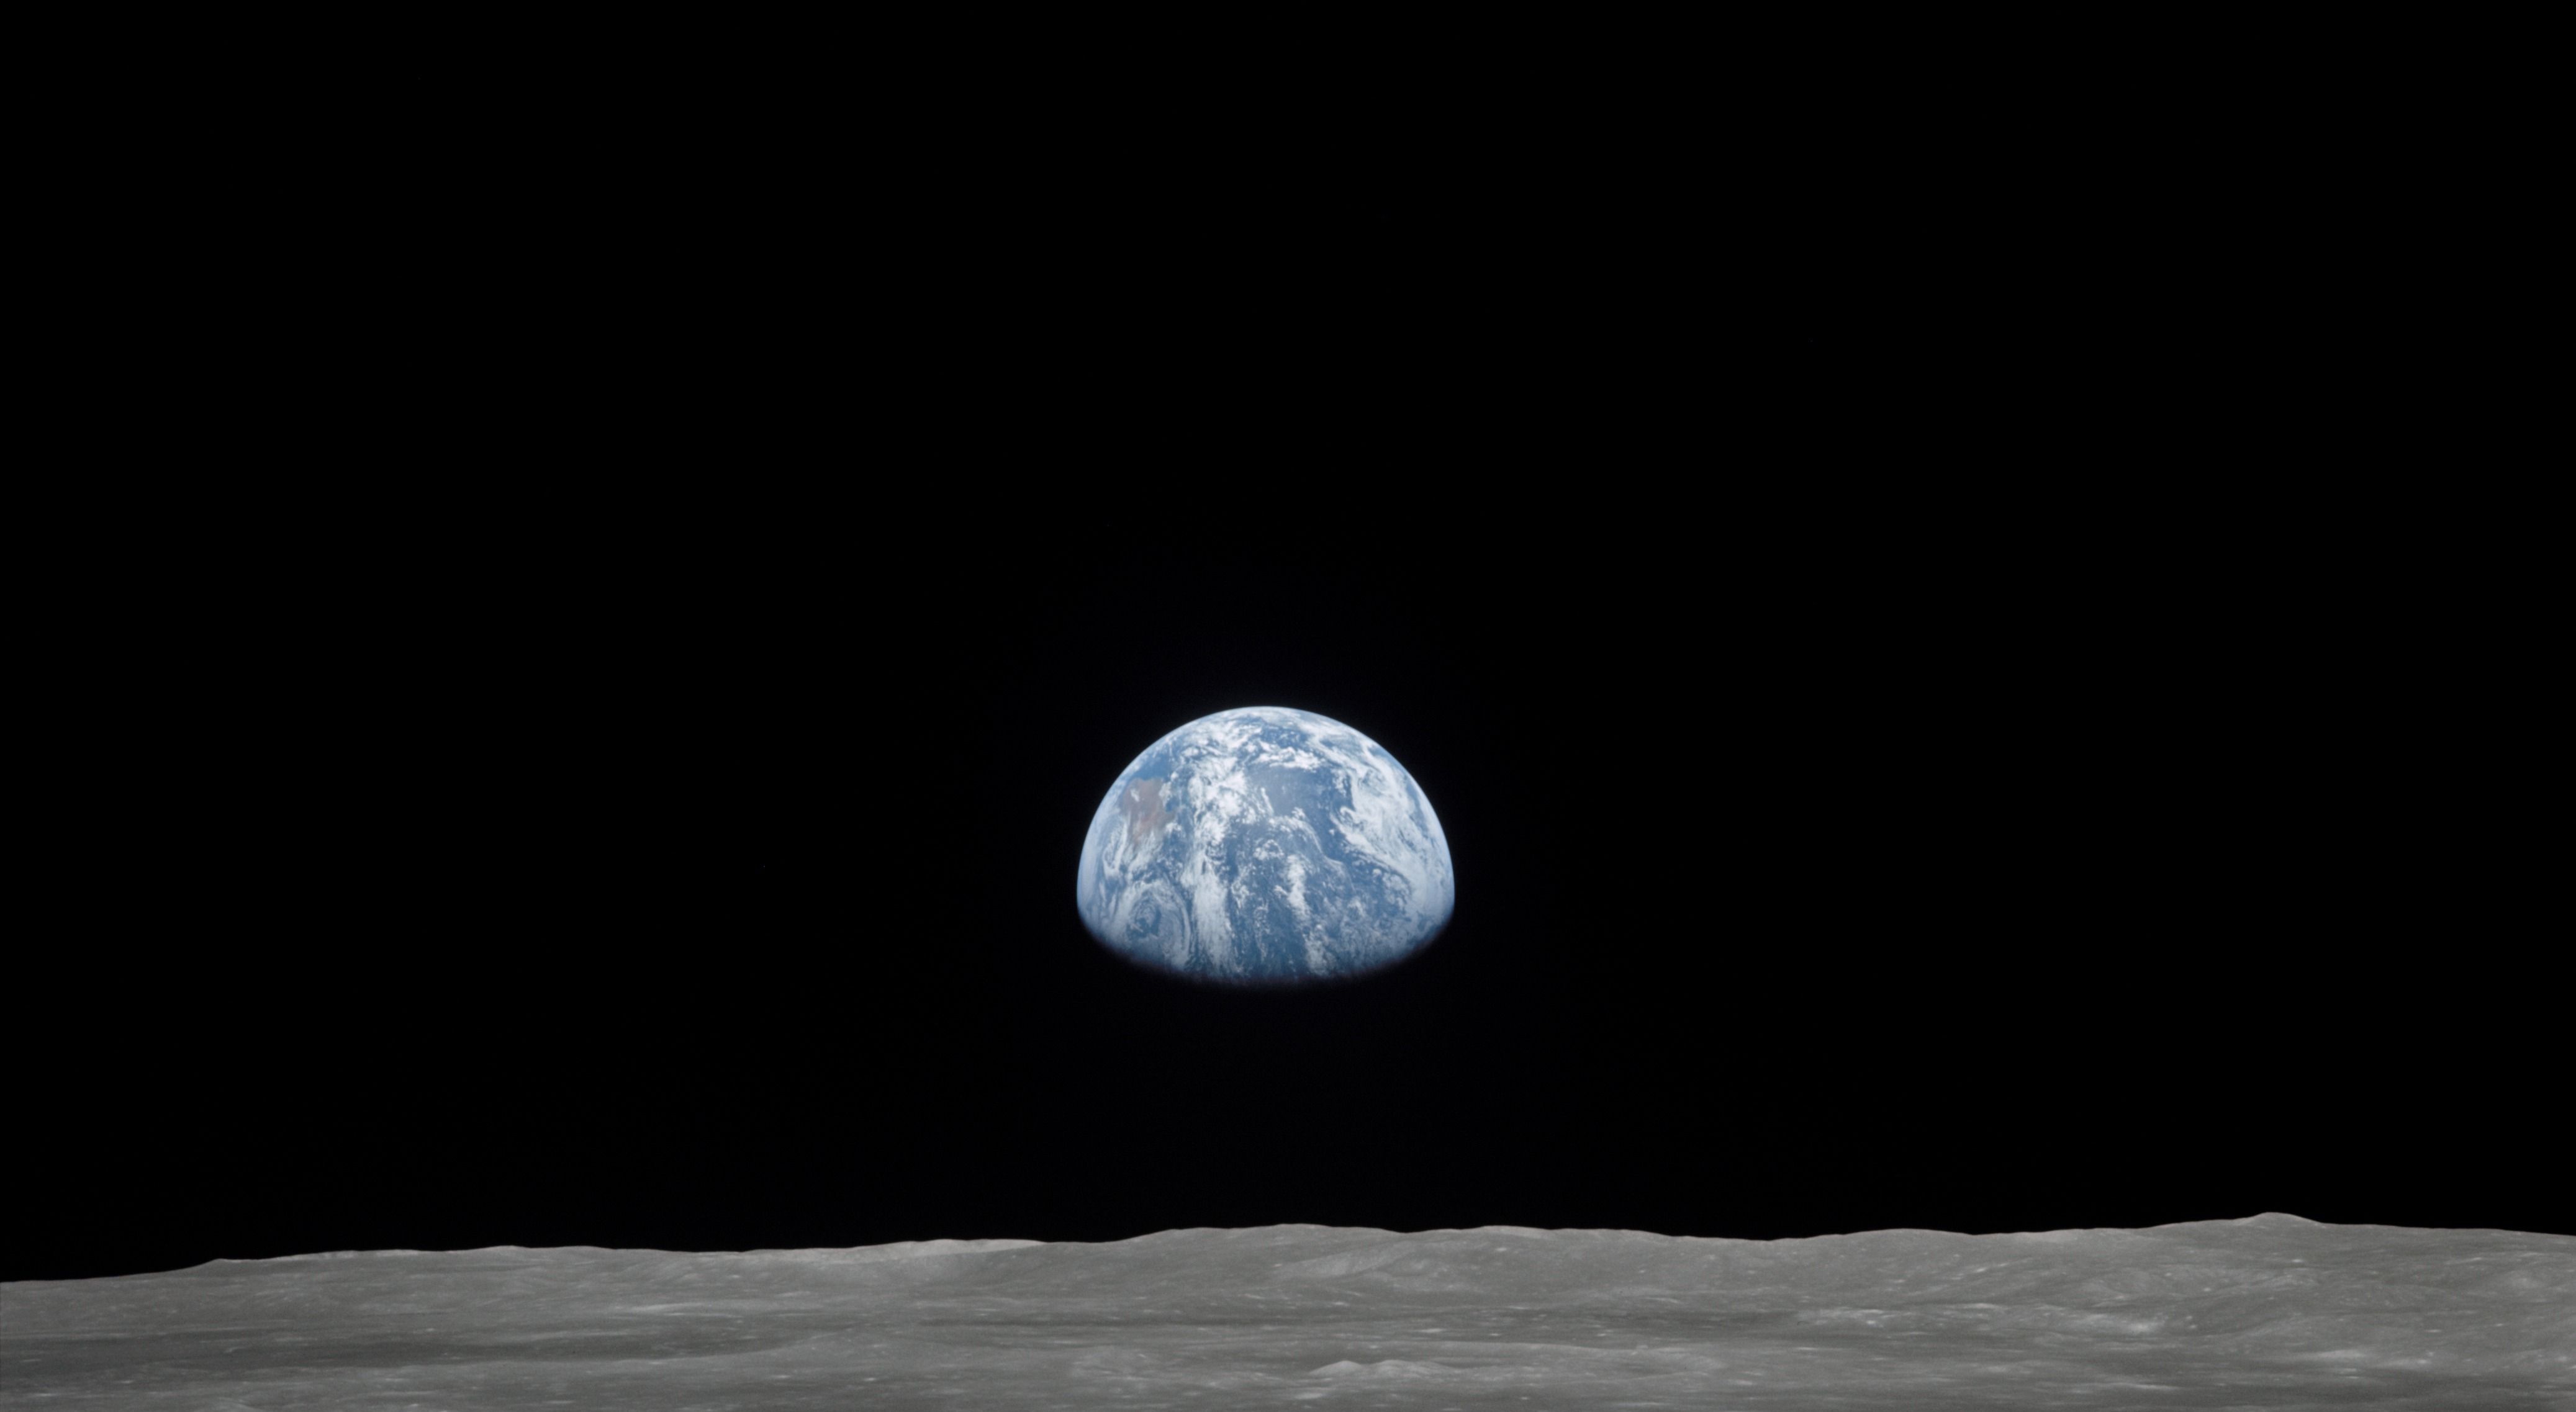 ONE GIANT LEAP APOLLO 11 Moon Landing Aug 13 1969 Dallas Morning News Supplement 